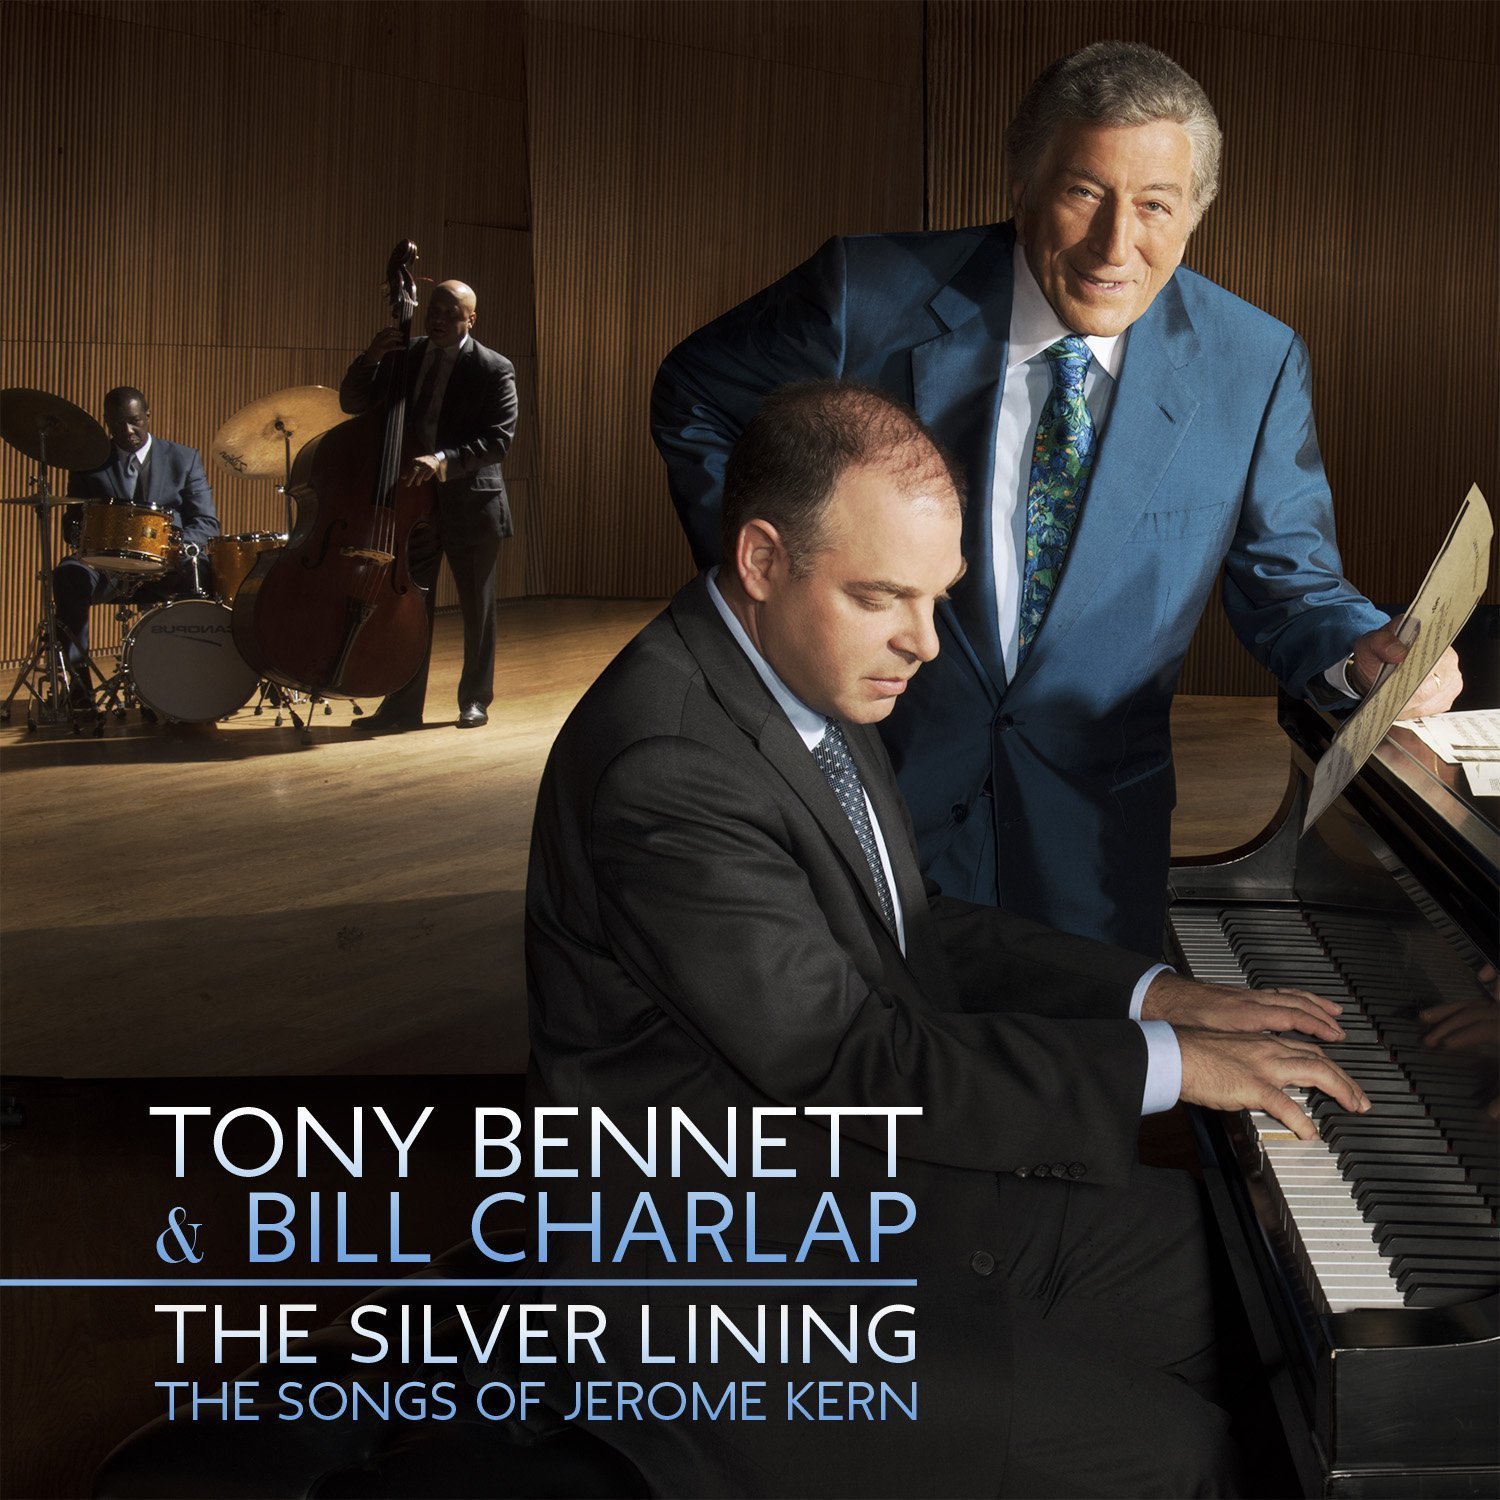 Tony Bennett & Bill Charlap - Silver Lining (The Songs of Jerome Kern) (Music CD)